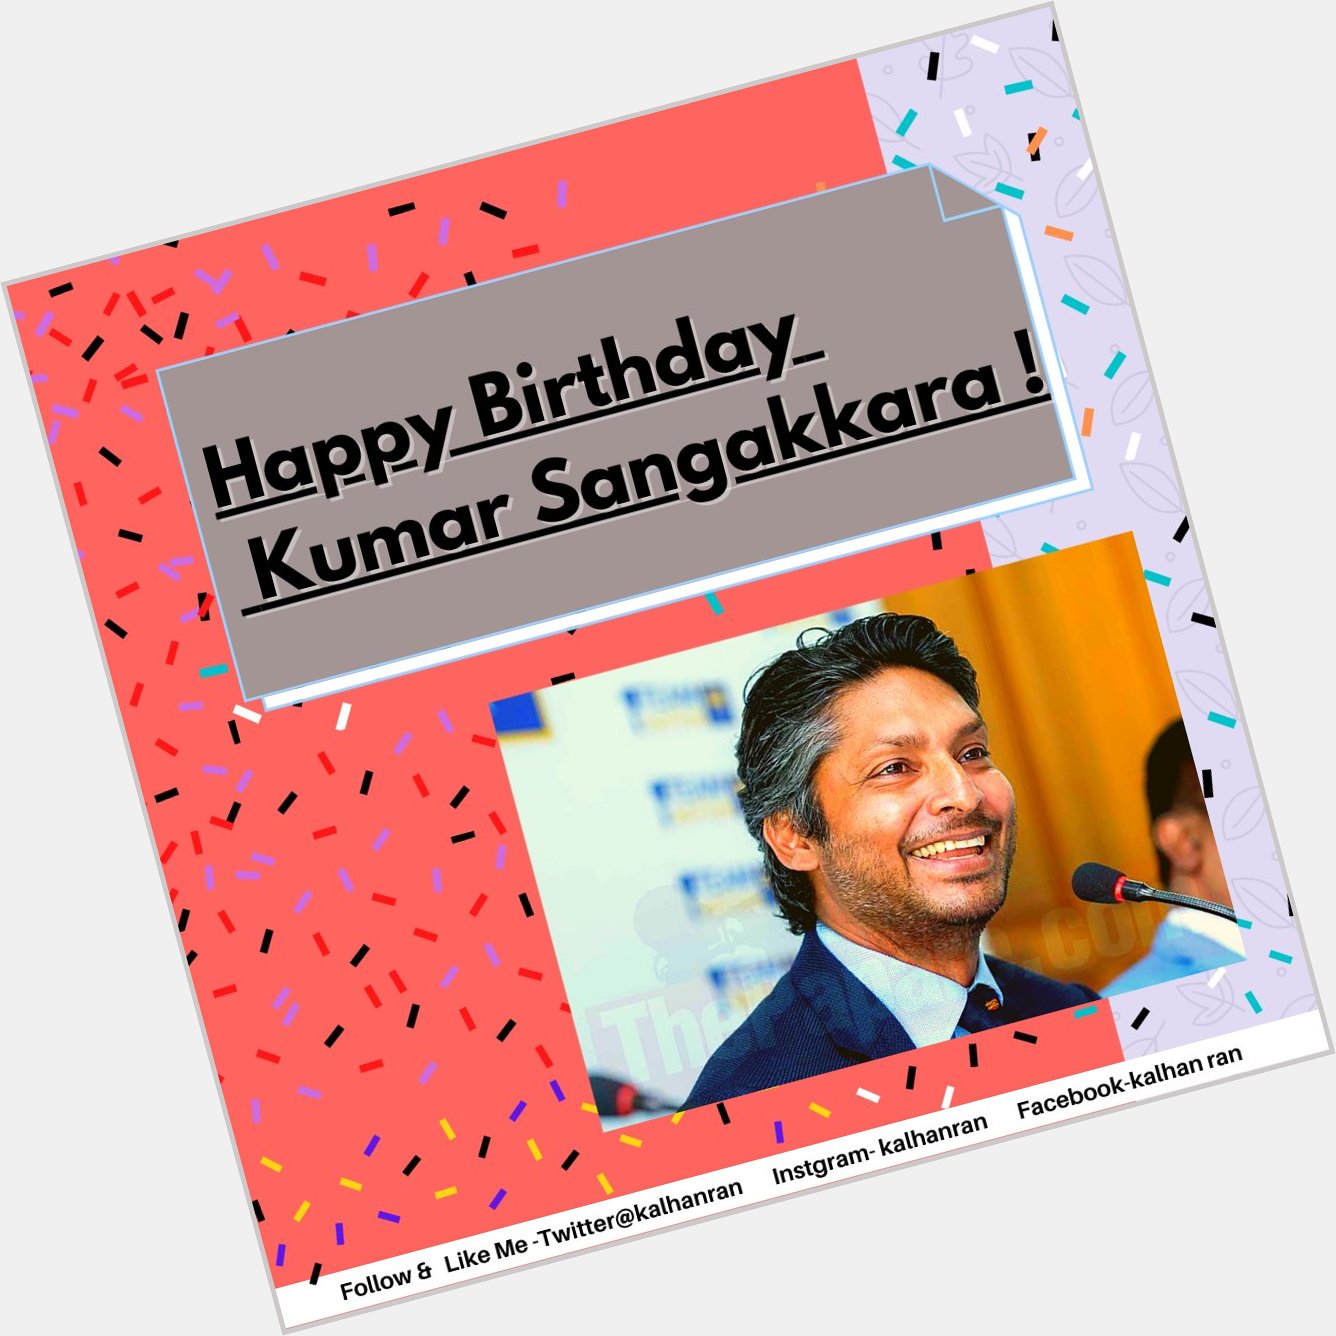   Happy Birthday Kumar Sangakkara ! 